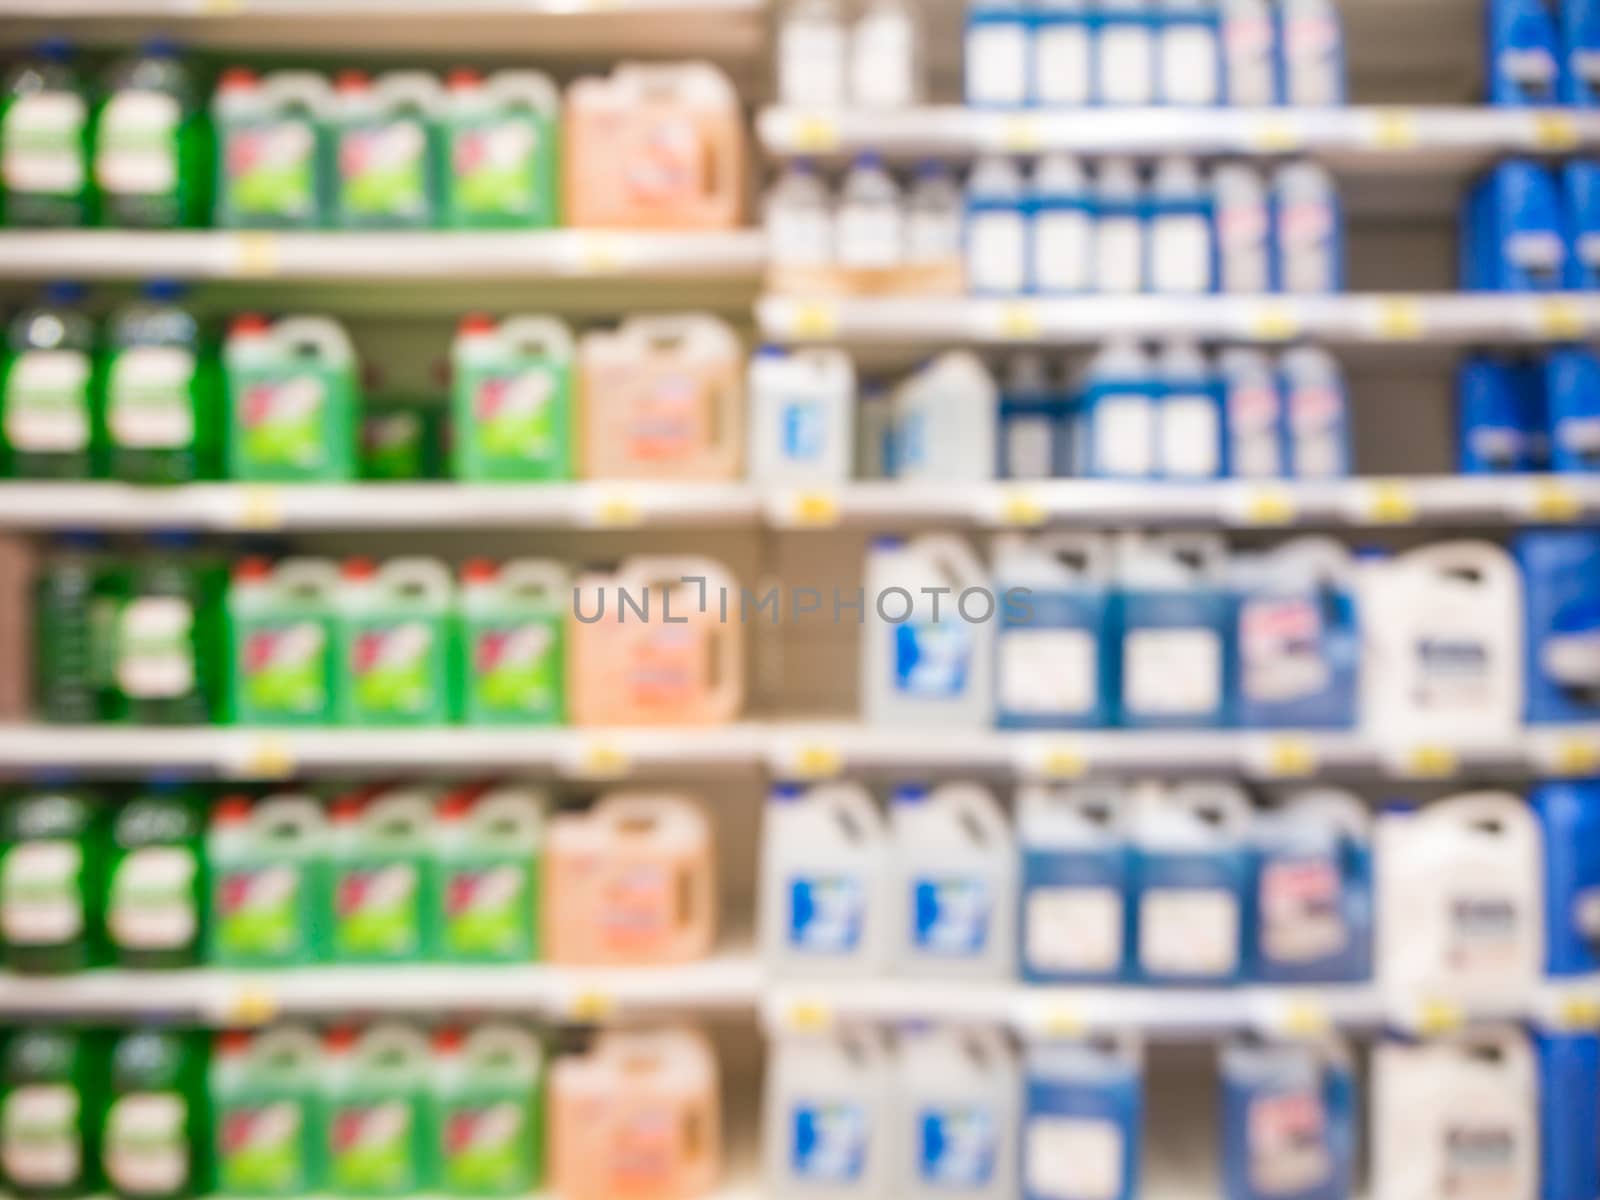 Blurred motor oil on shelves in supermarket by fascinadora